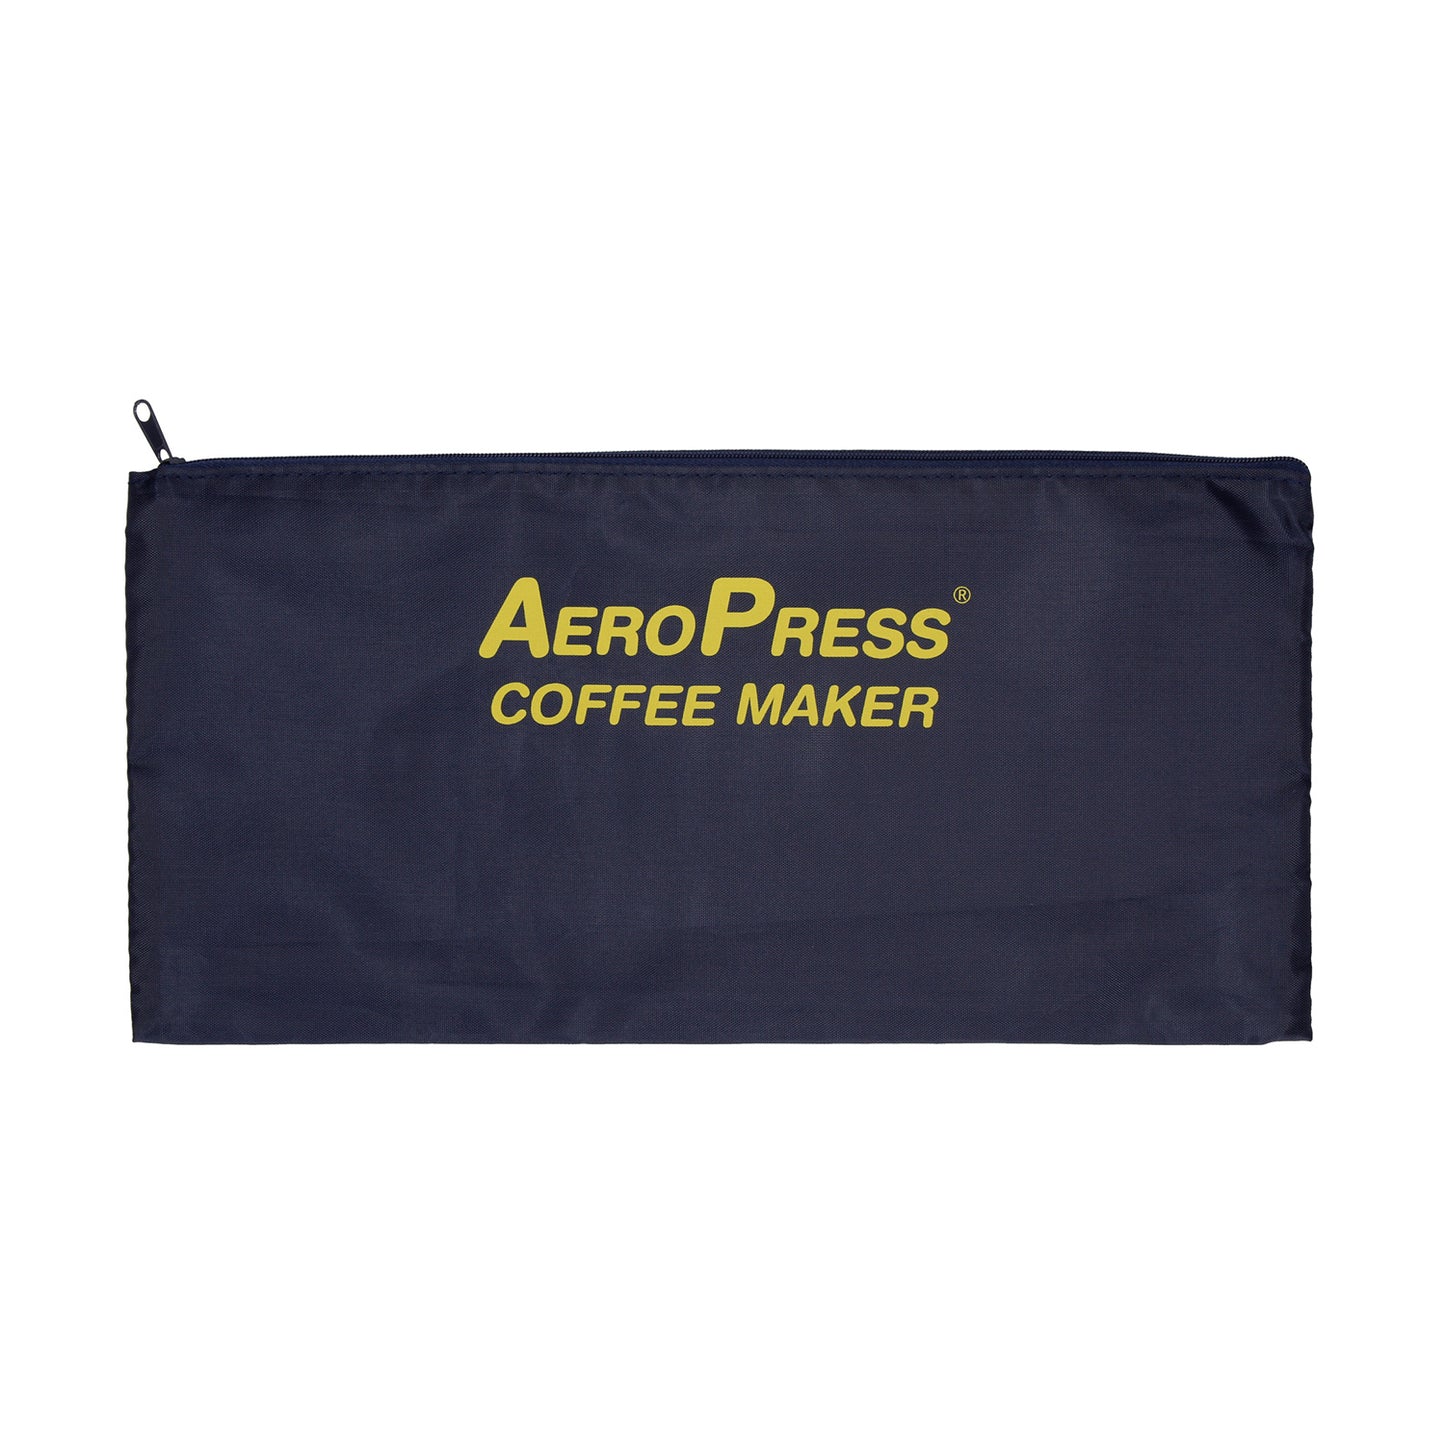 Aeropress® tote bag, portable bag